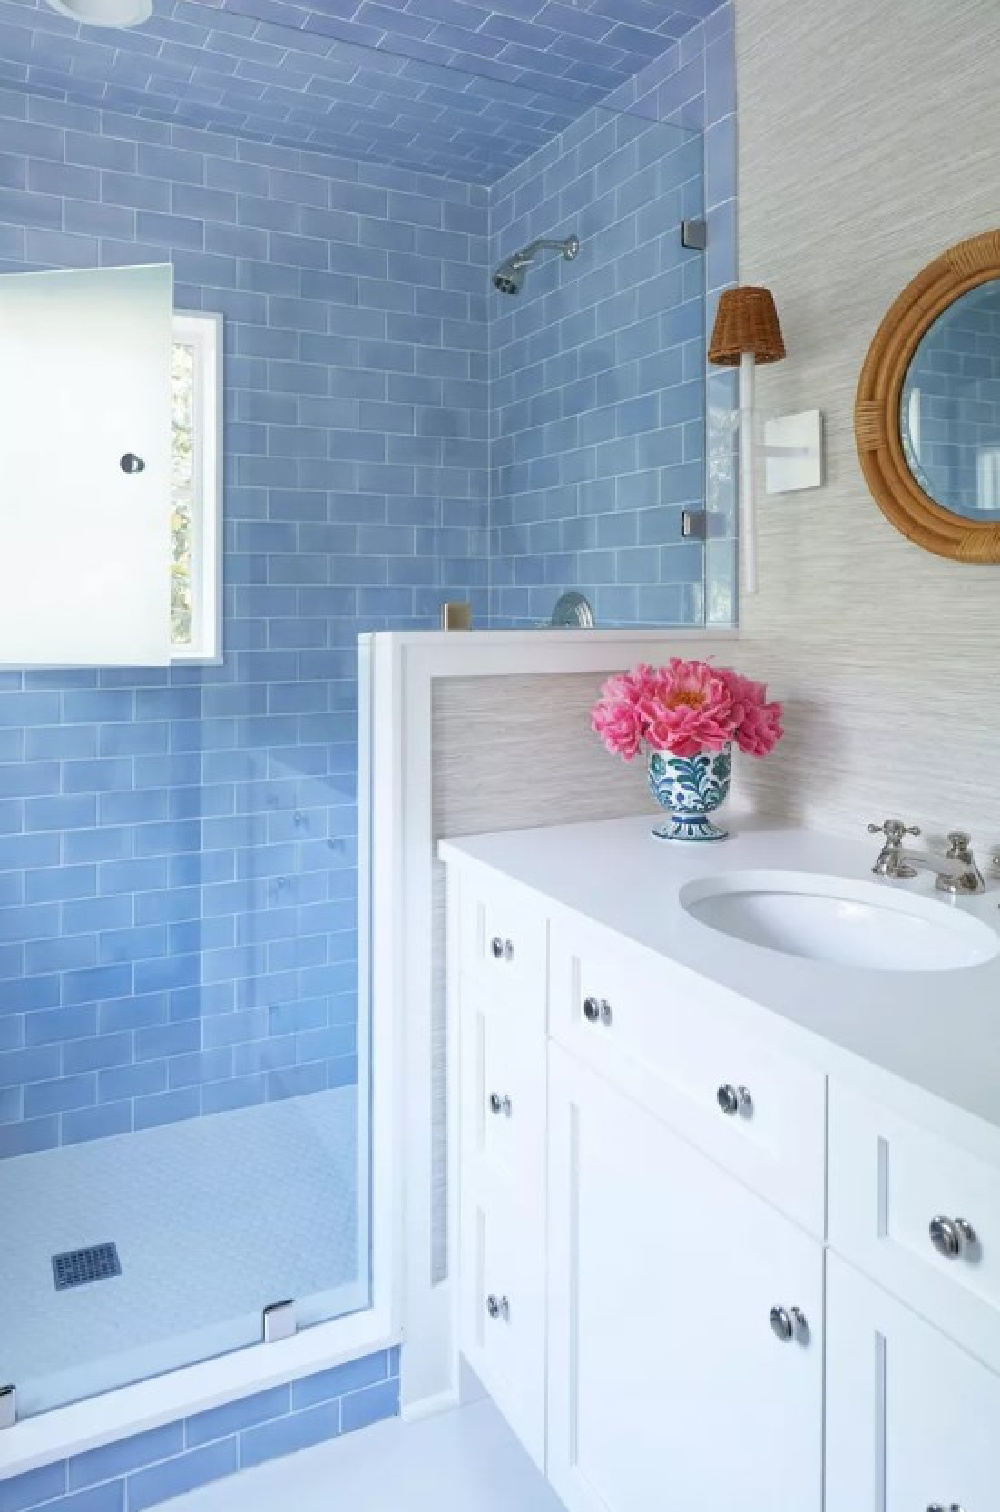 Caribbean blue tile in a shower of guest room - Julia Berolzheimer's home in Southern Living (photo: Hector Manuel Sanchez). #bluetile #brightbluebathroom